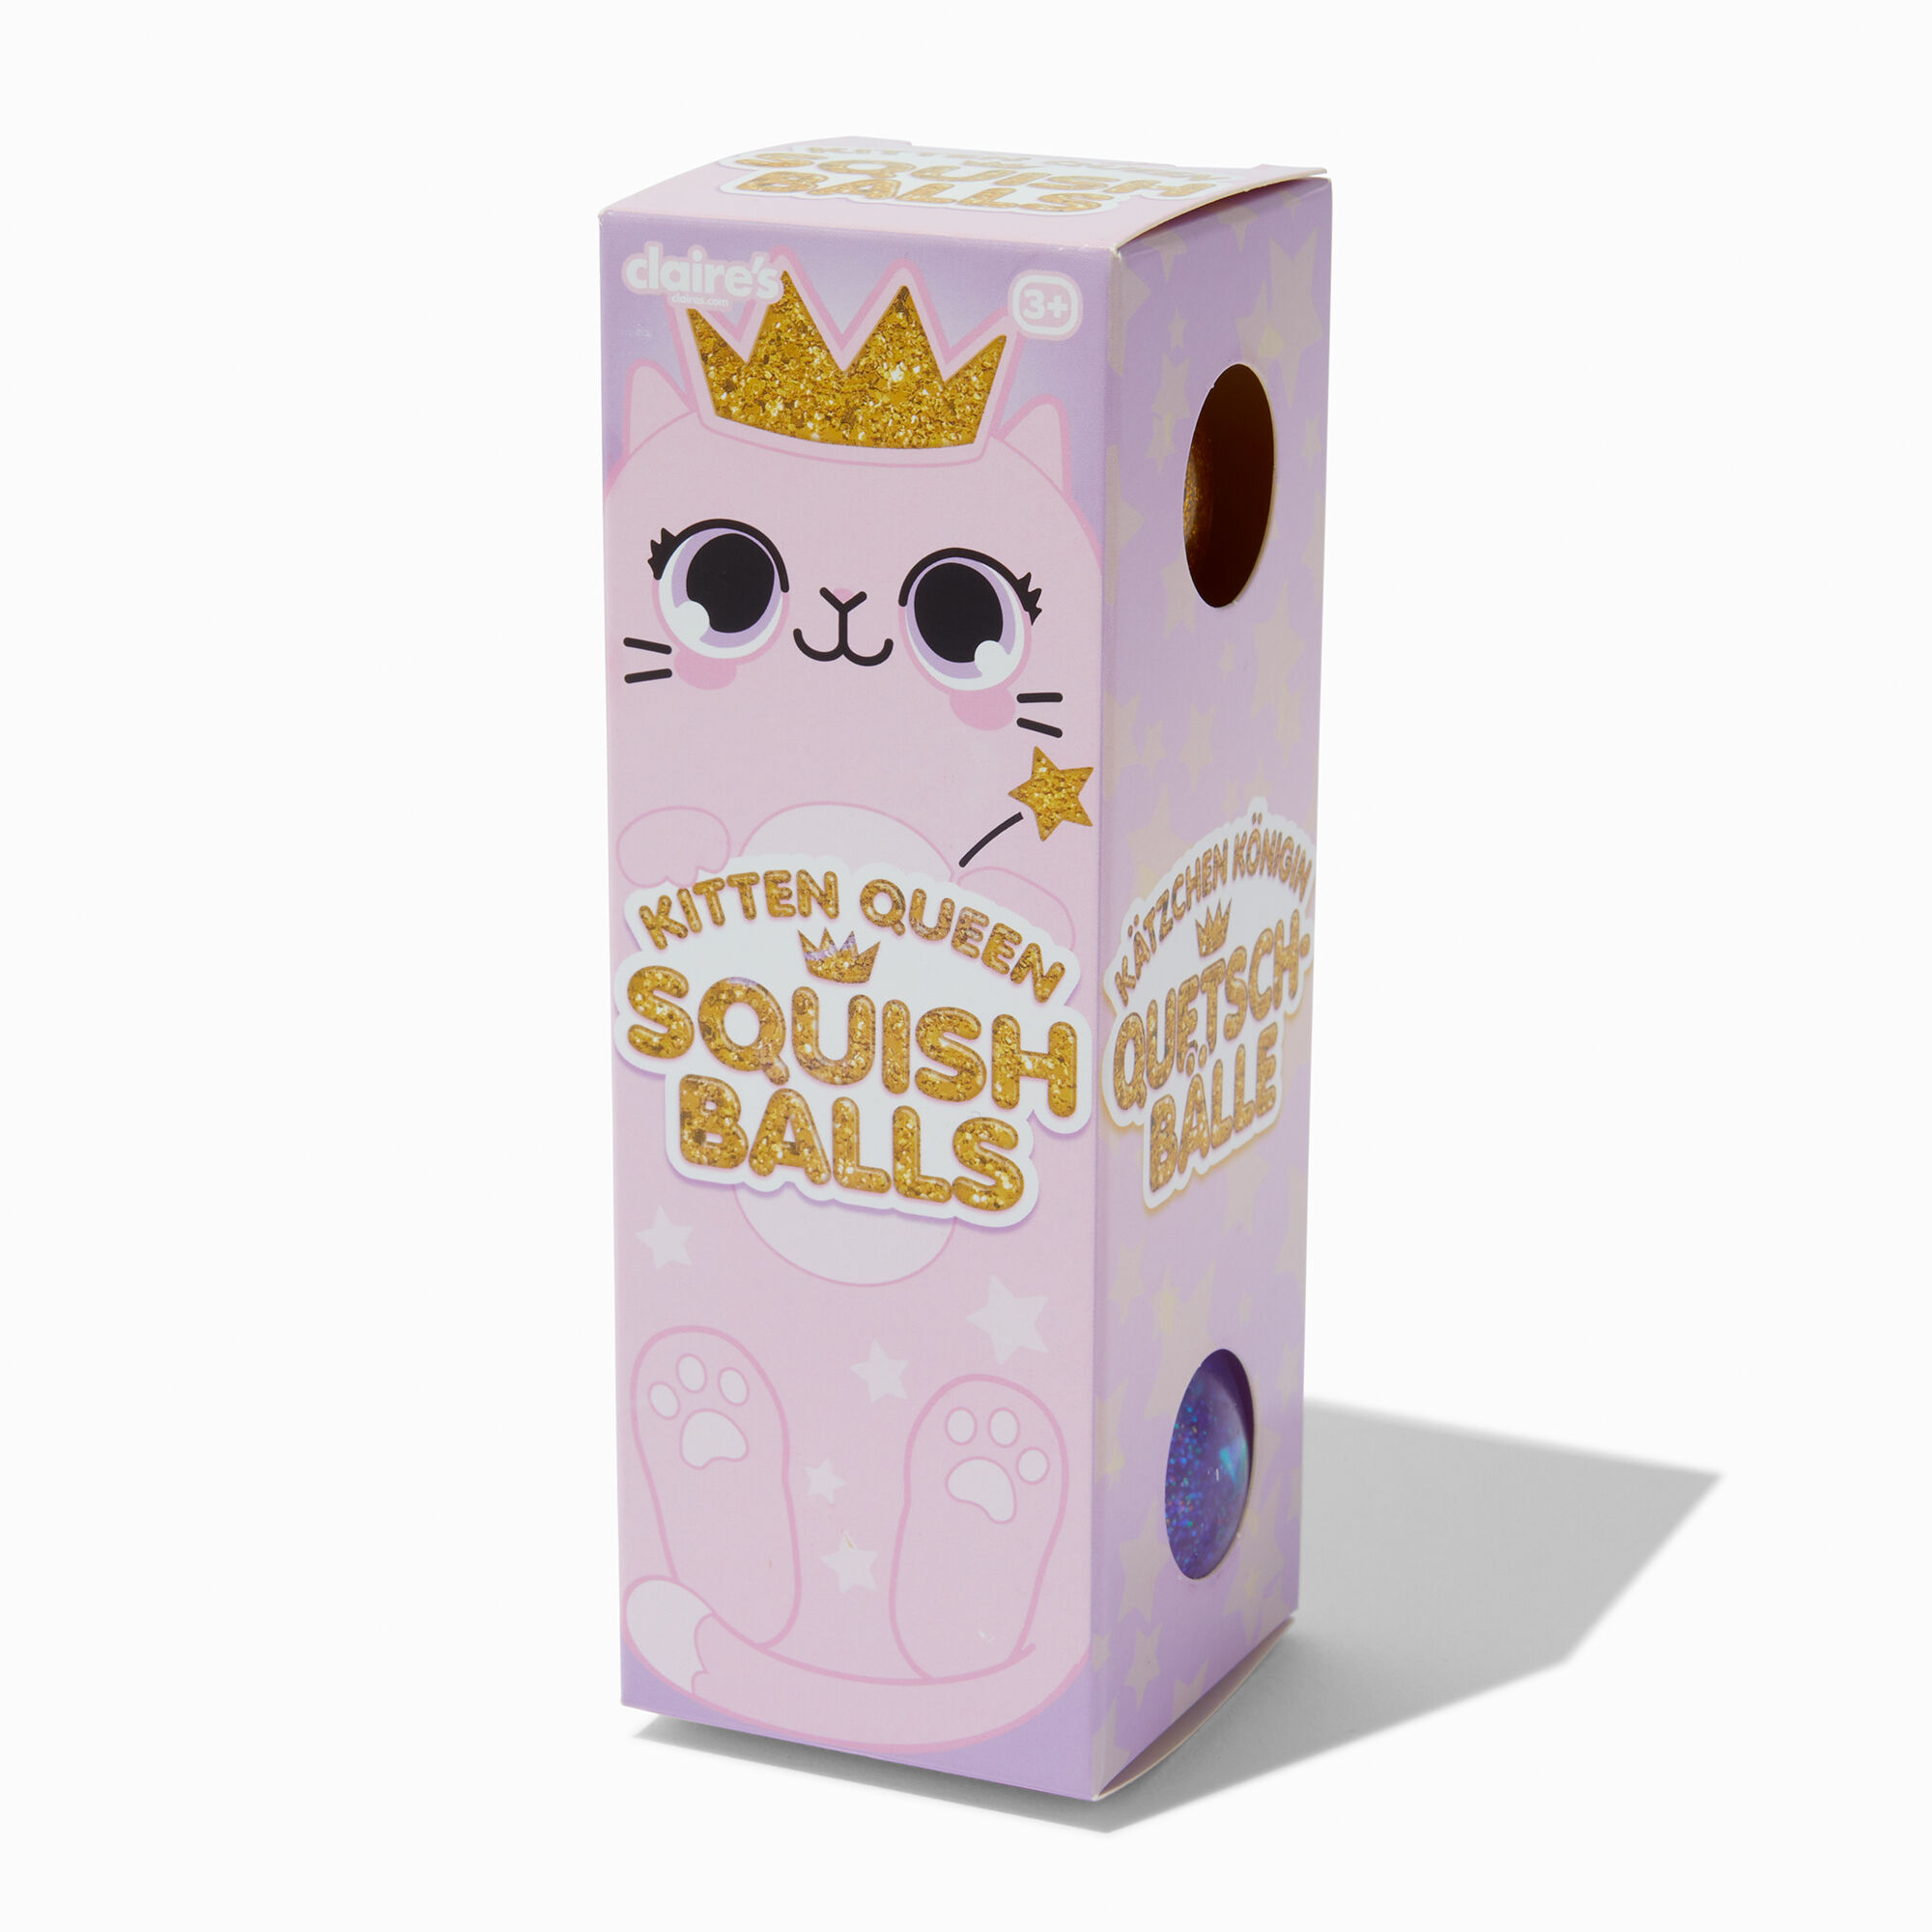 View Claires Kitten Queen Squish Balls 3 Pack information